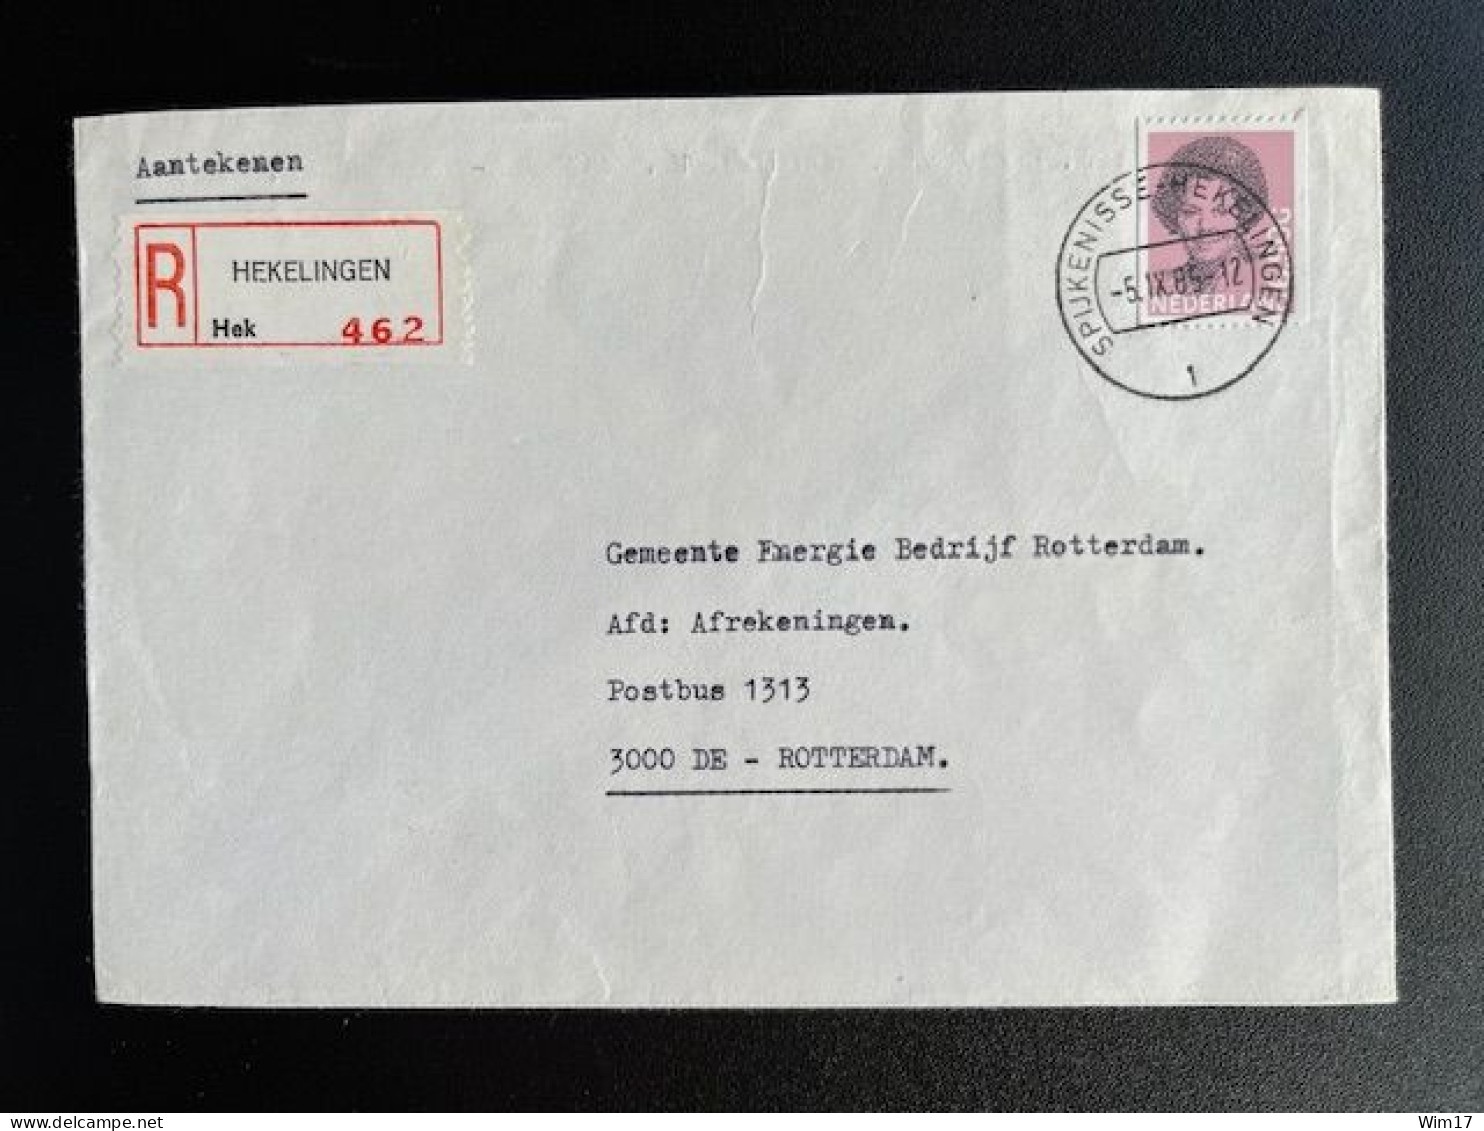 NETHERLANDS 1985 REGISTERED LETTER HEKELINGEN TO ROTTERDAM 05-09-1985 NEDERLAND AANGETEKEND - Covers & Documents